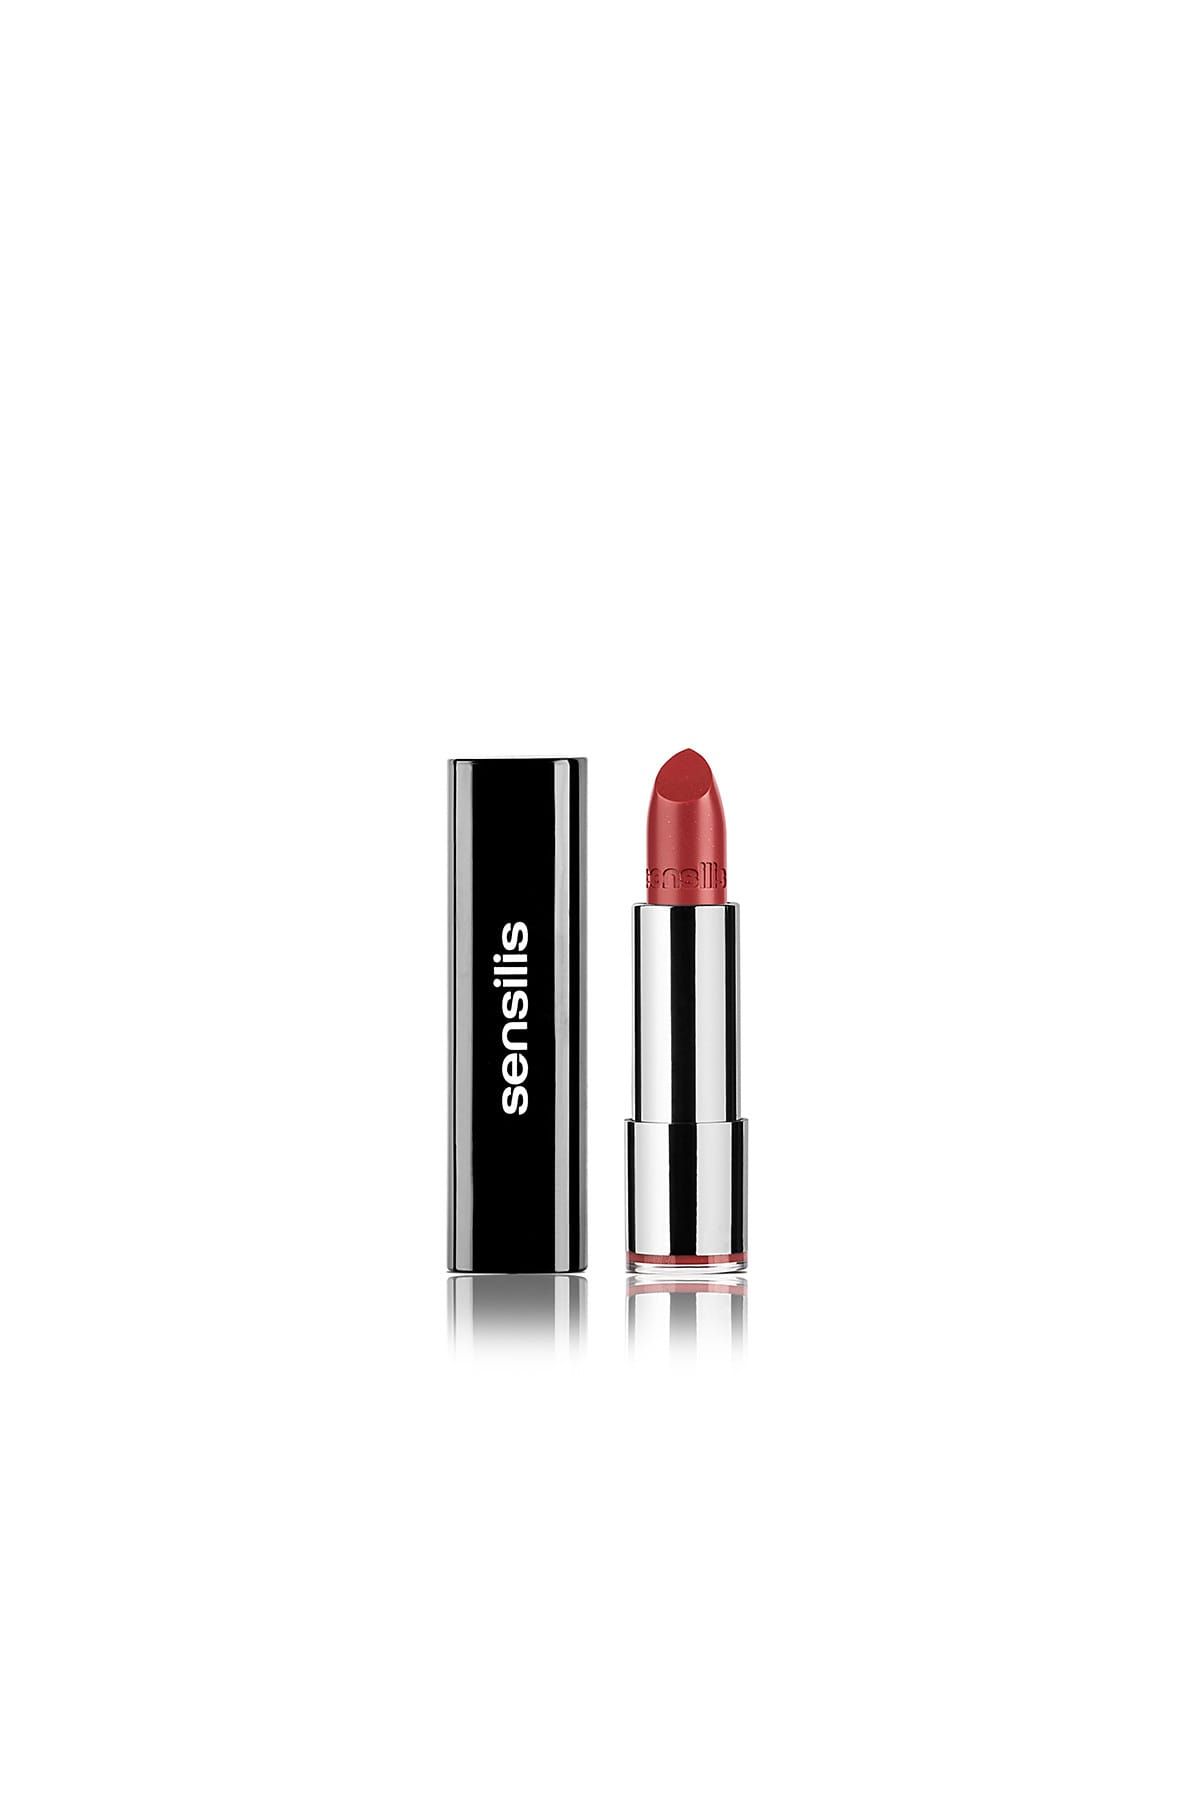 sensilis Ruj - Velvet Satin Comfort Lipstick 207 Terracota 8428749521808